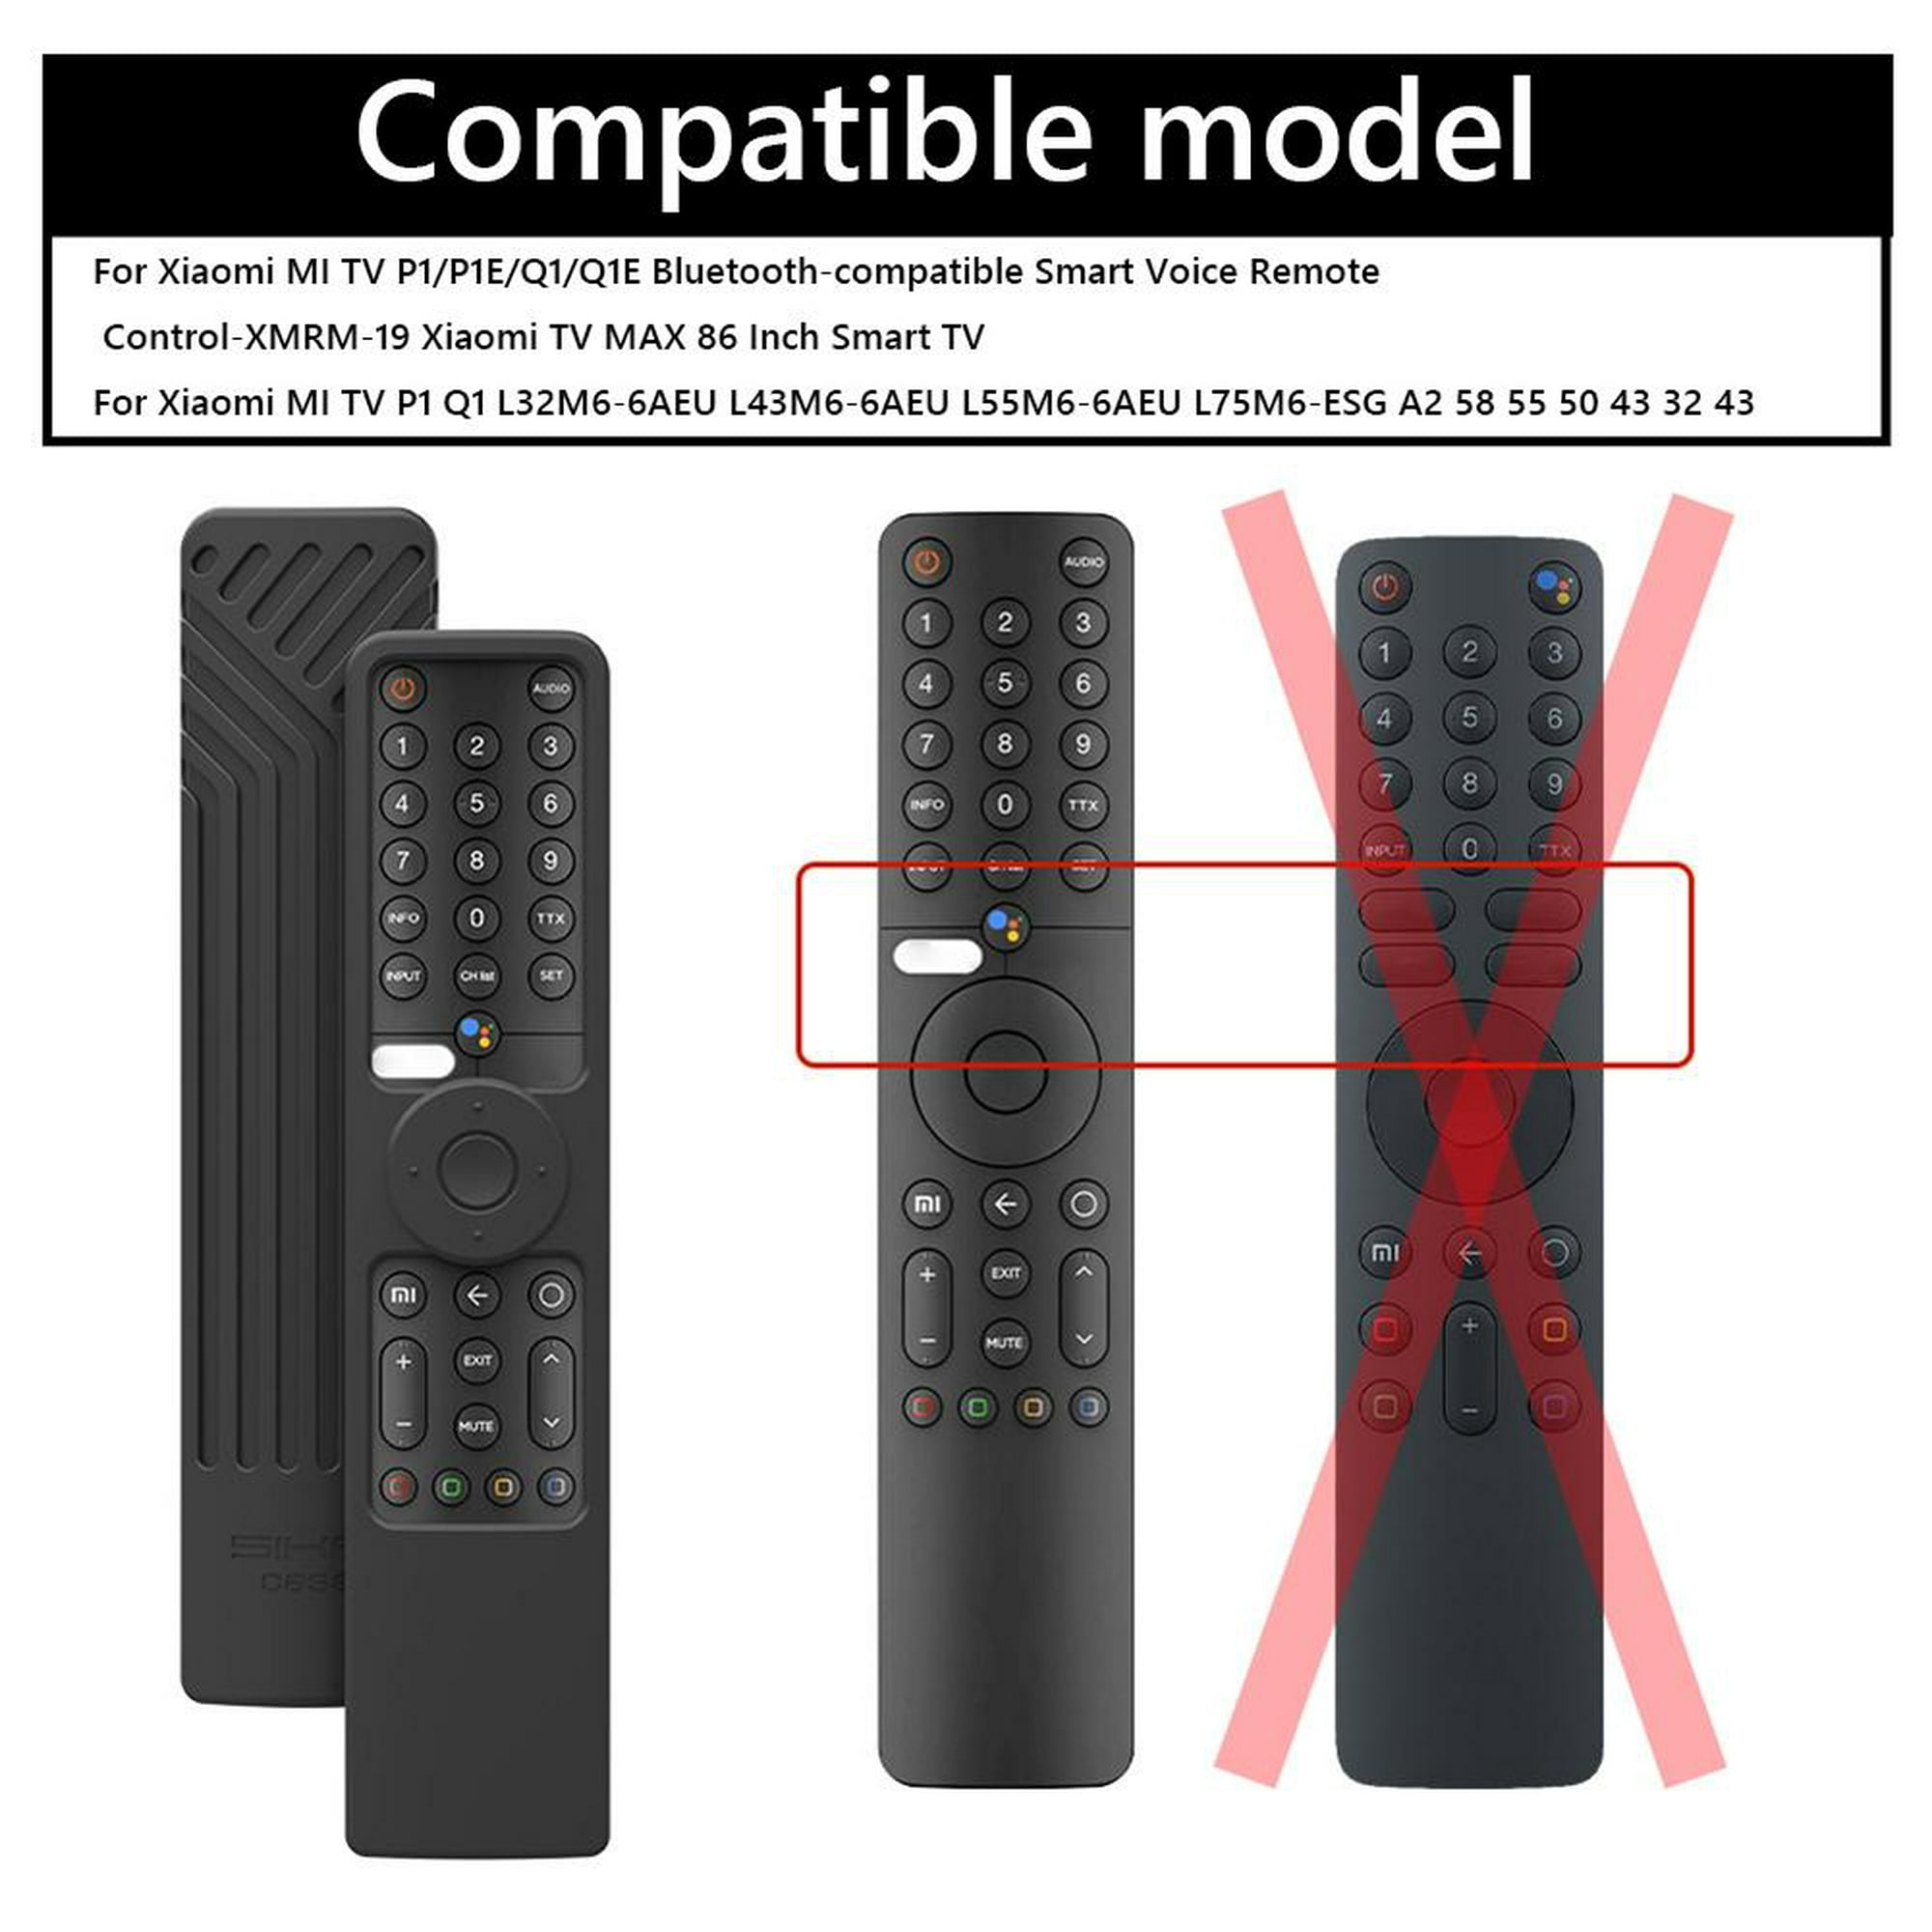 Control remoto Para Xiaomi MI TV Modelo XMRM-19 UNIVERSAL